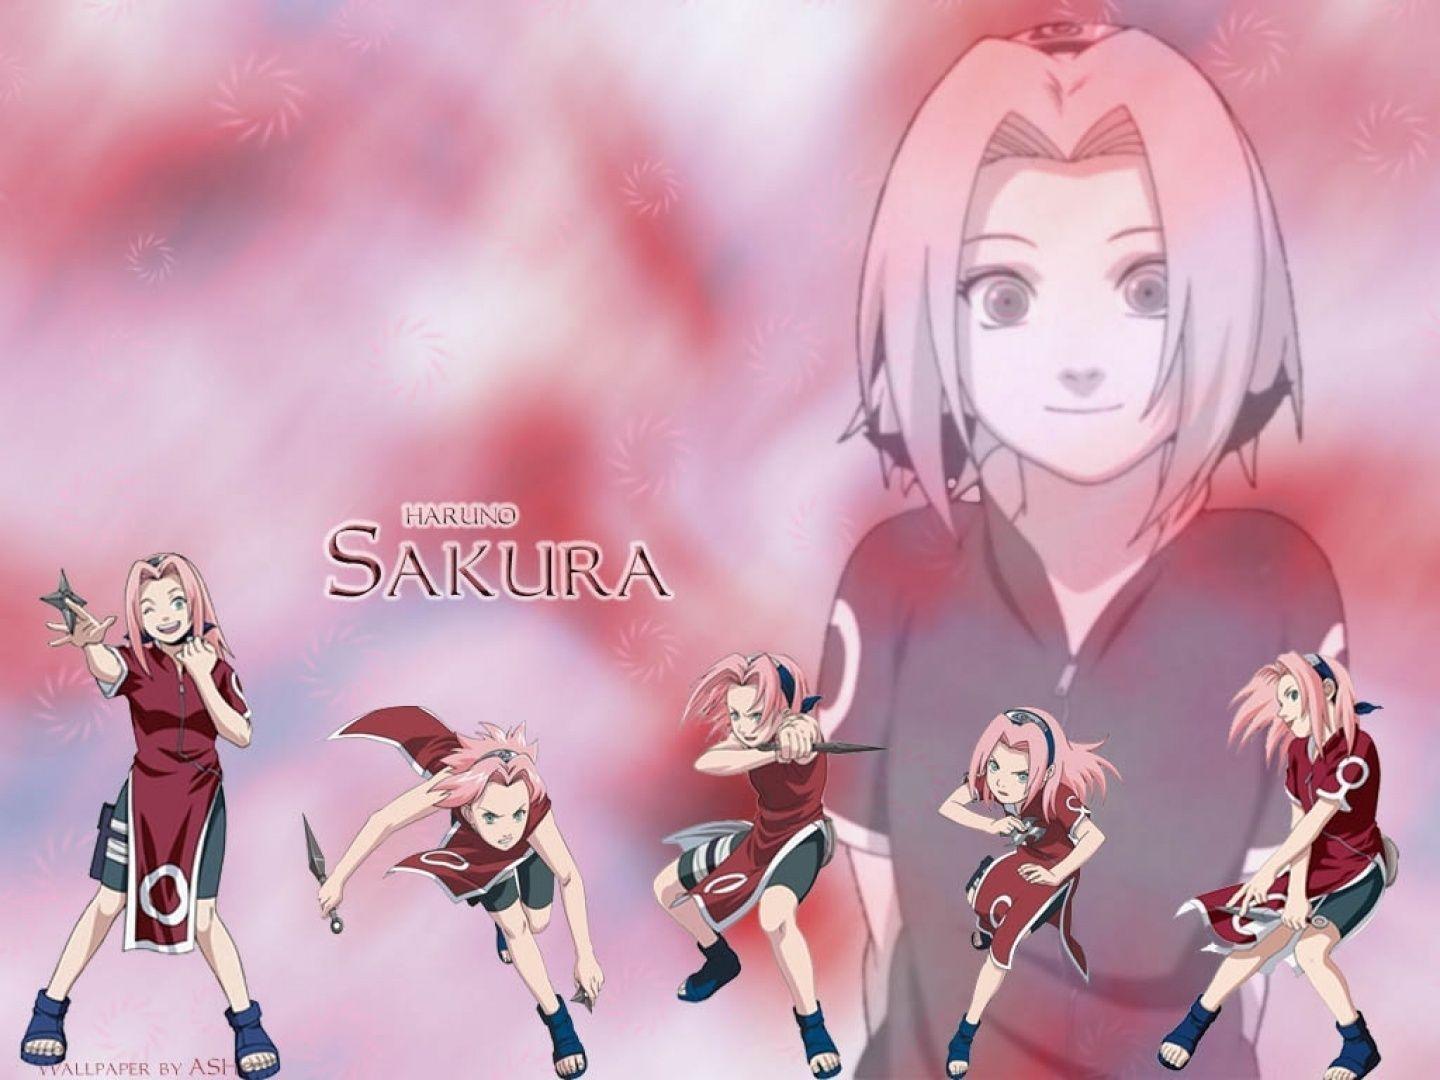 Sasuke Naruto and Sakura Anime series wallpaper  1920x1080  1079512   WallpaperUP